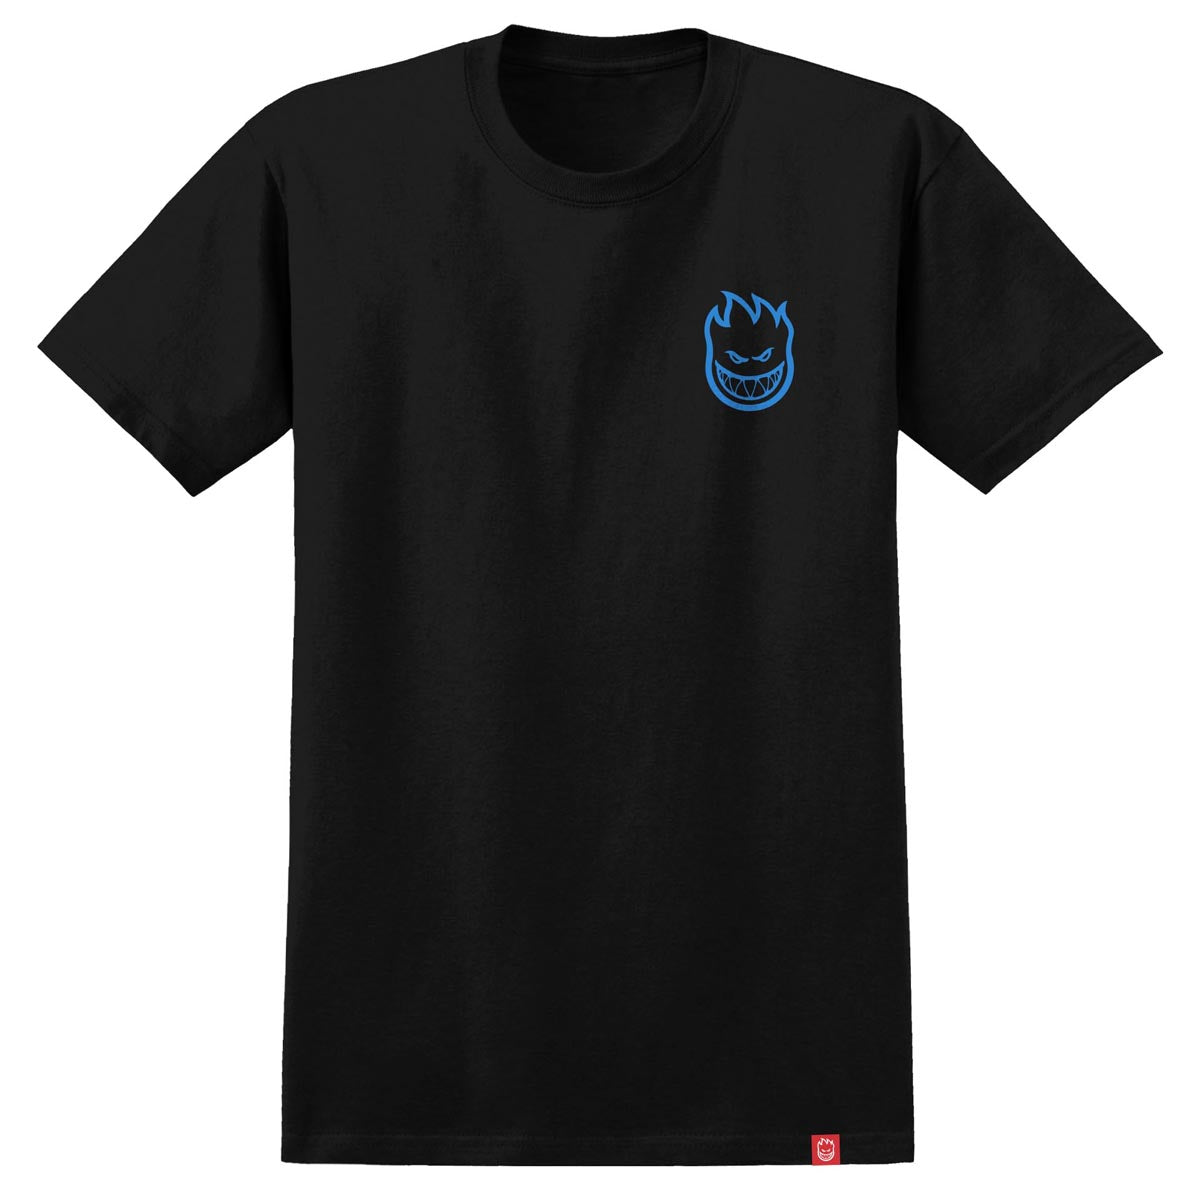 Spitfire Lil Bighead T-Shirt - Black/Blue image 1